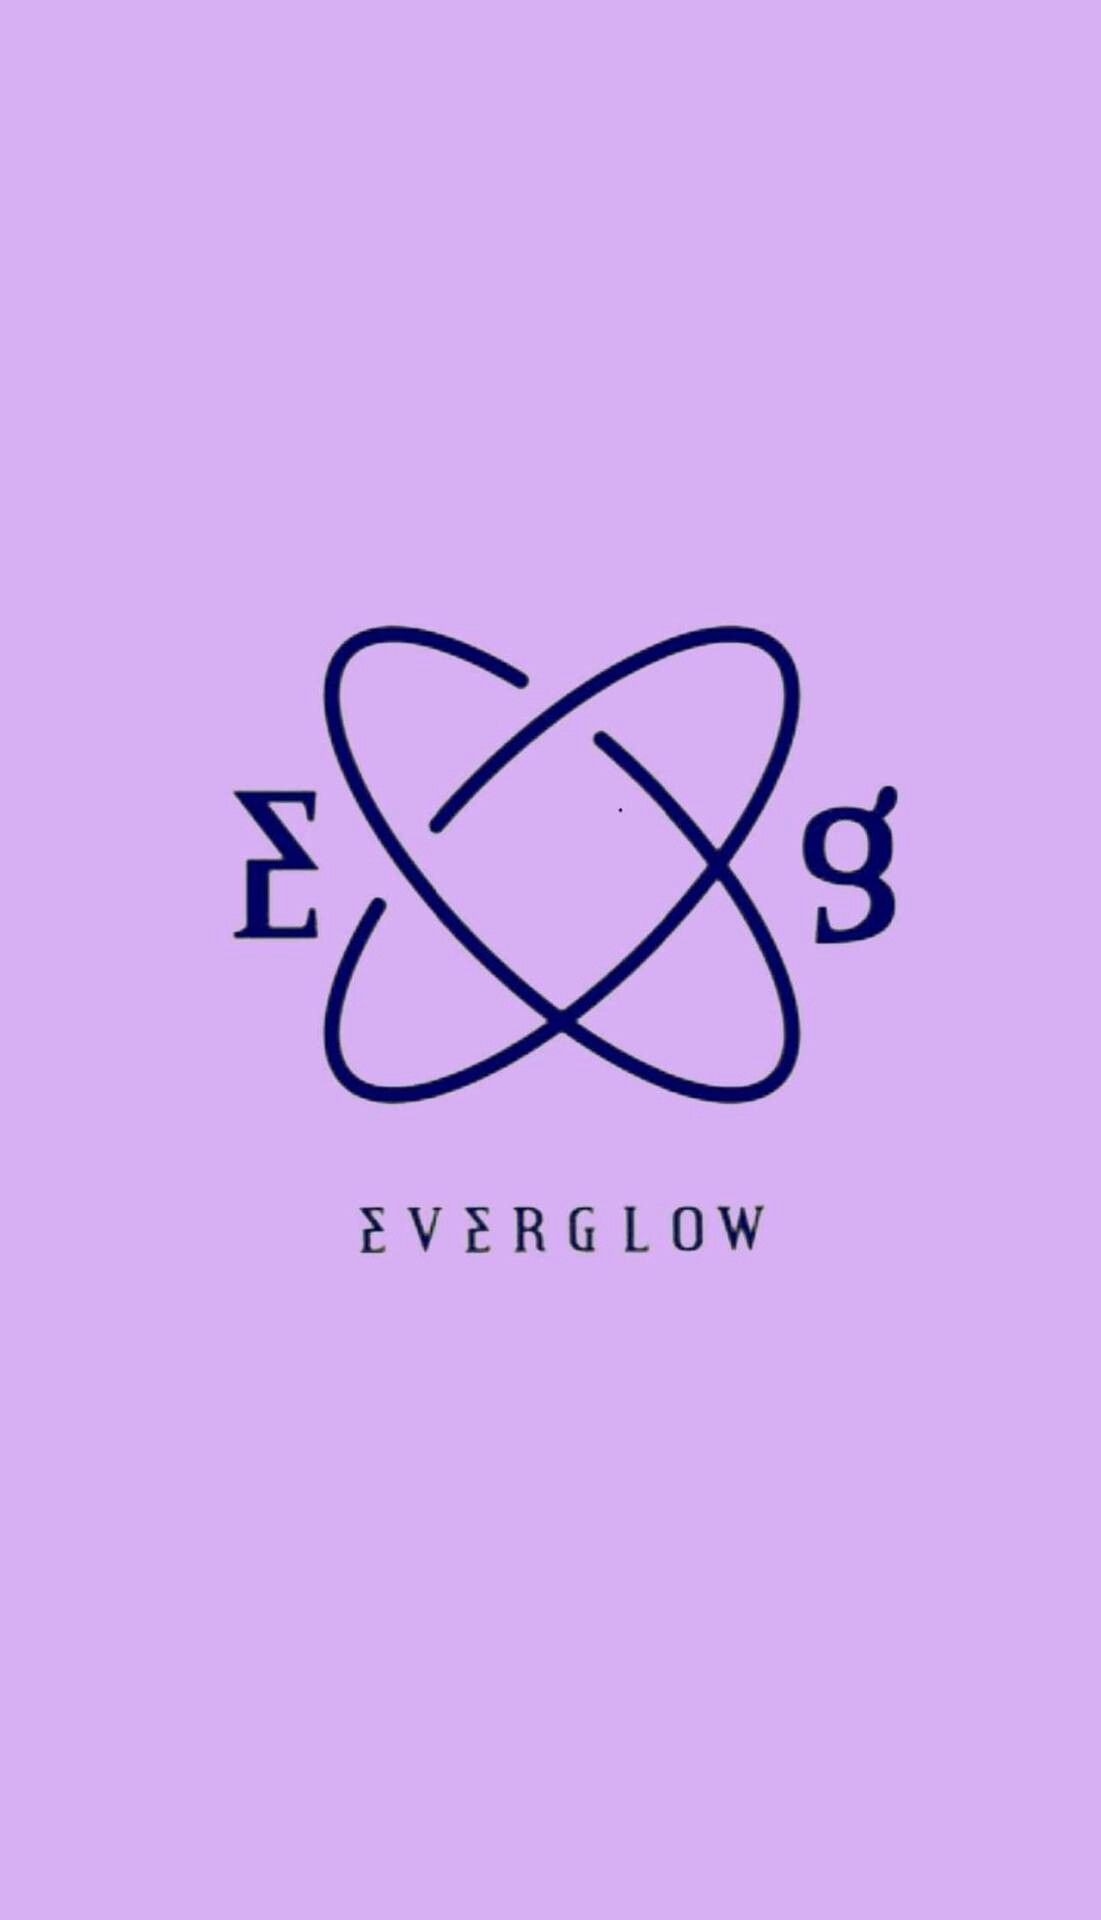 Everglow (Originally Performed By Coldplay) [Karaoke Version] - Single -  Album by Starstruck Backing Tracks - Apple Music